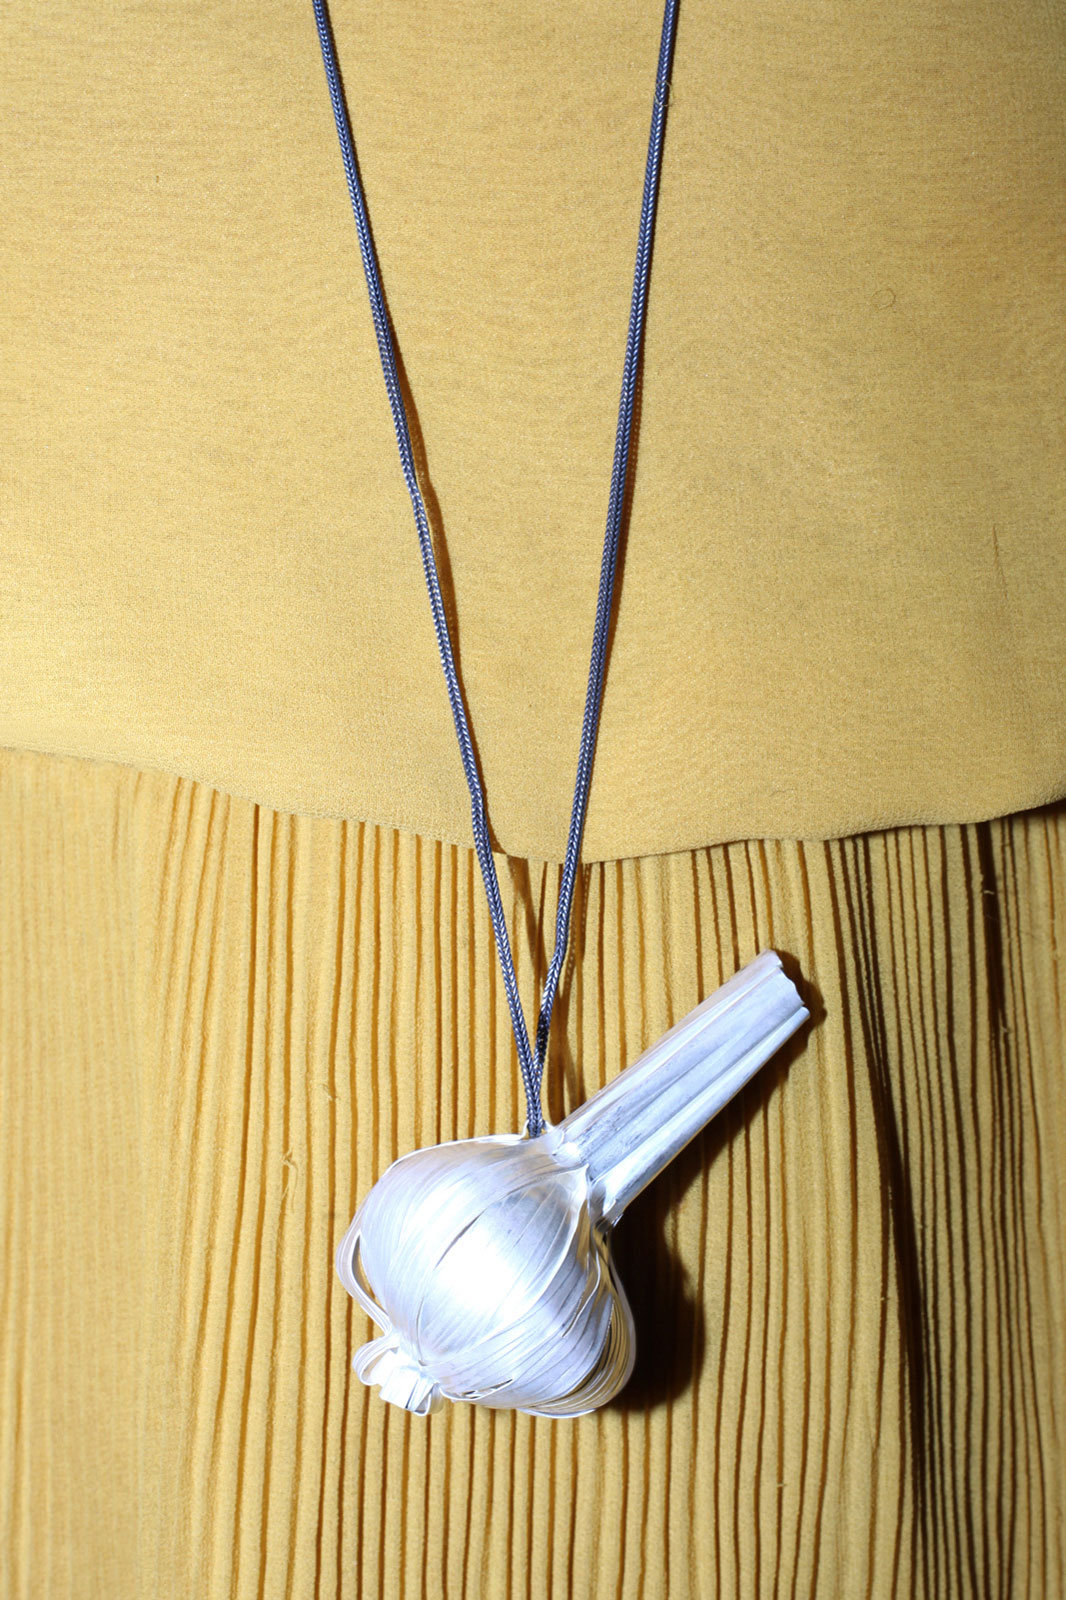 Garlic (pendant), 2011